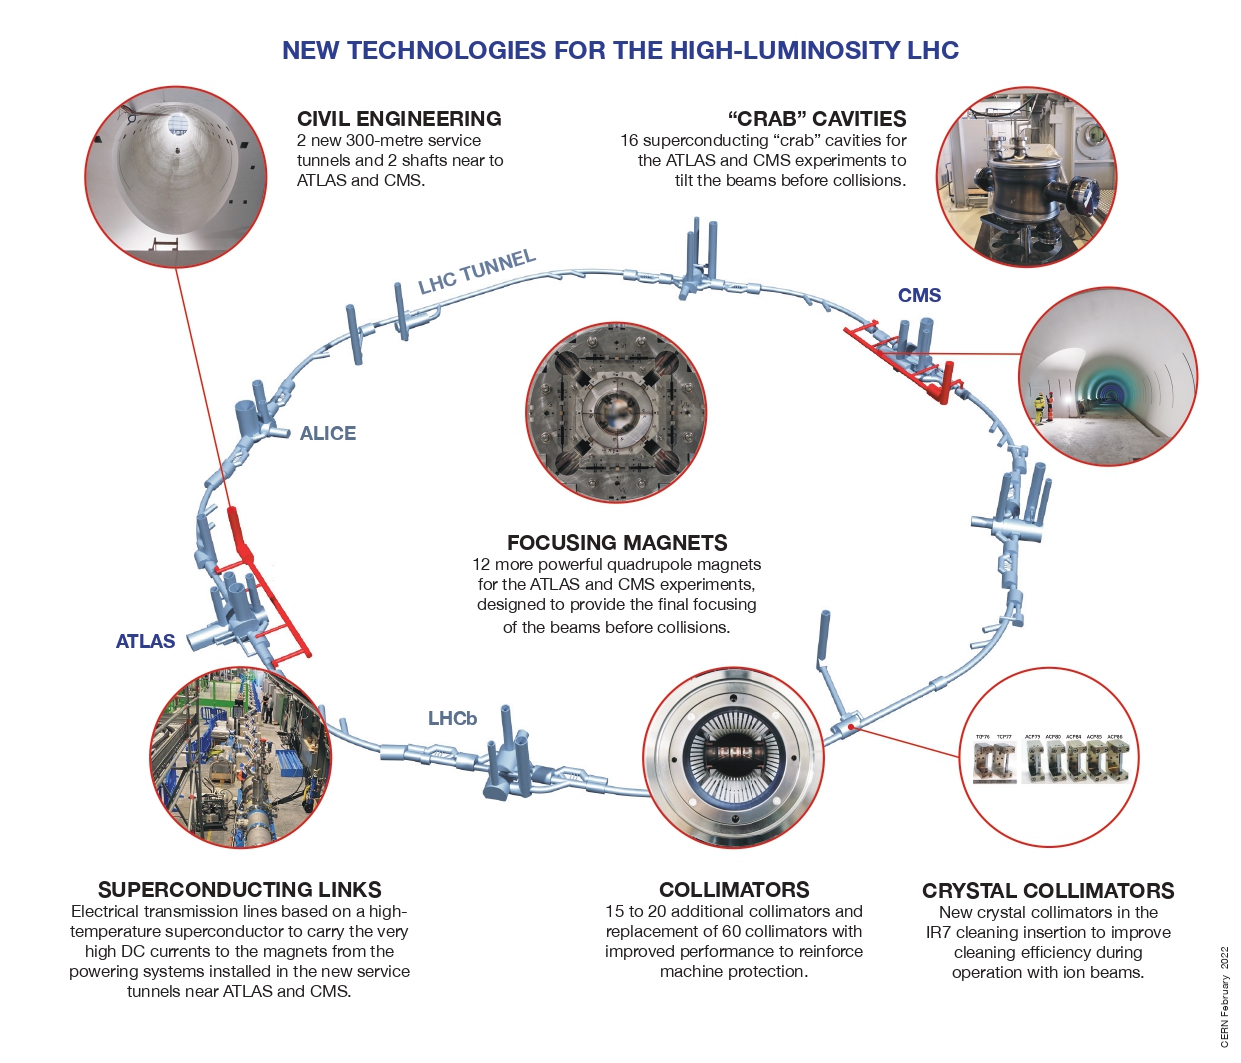 HL-LHC new technologies